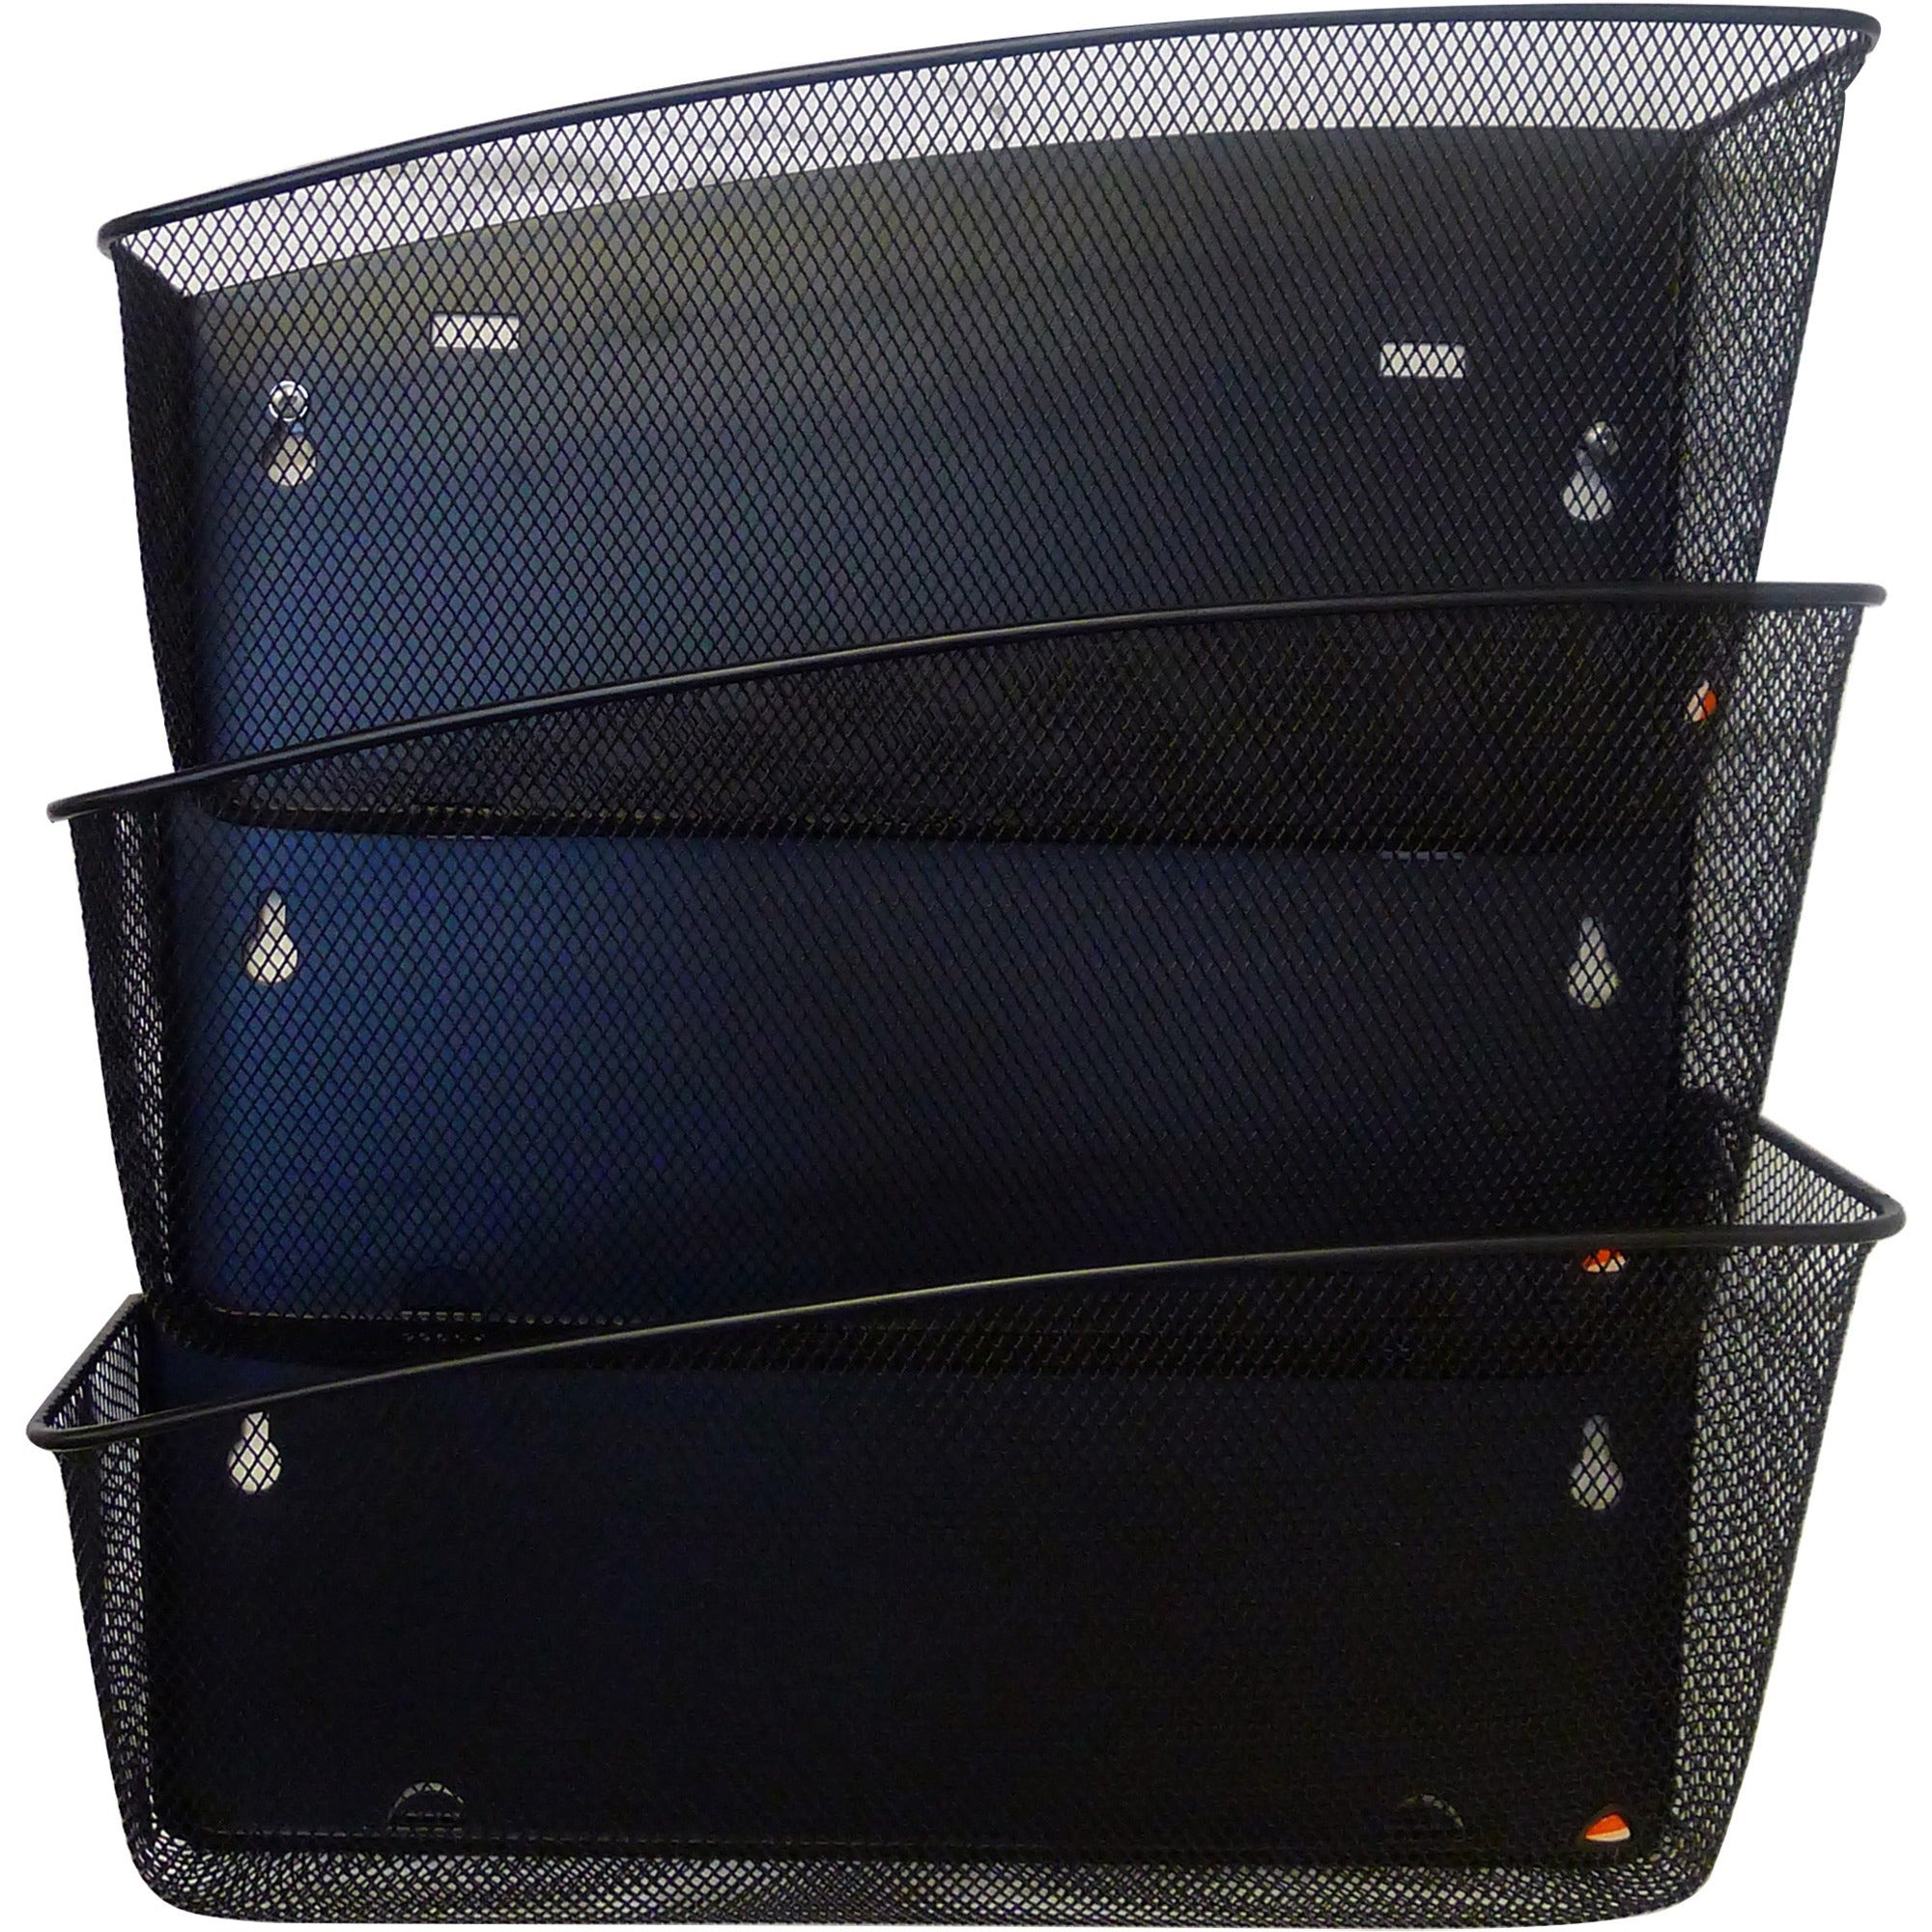 Alba Mesh Wall File Set - 3 Pocket(s) - Compartment Size 6.69" x 13.78" x 4.72" - 15.9" Height4.7" Depth x 13.8" Length - Black - Steel, Metal - 1 Each - 1